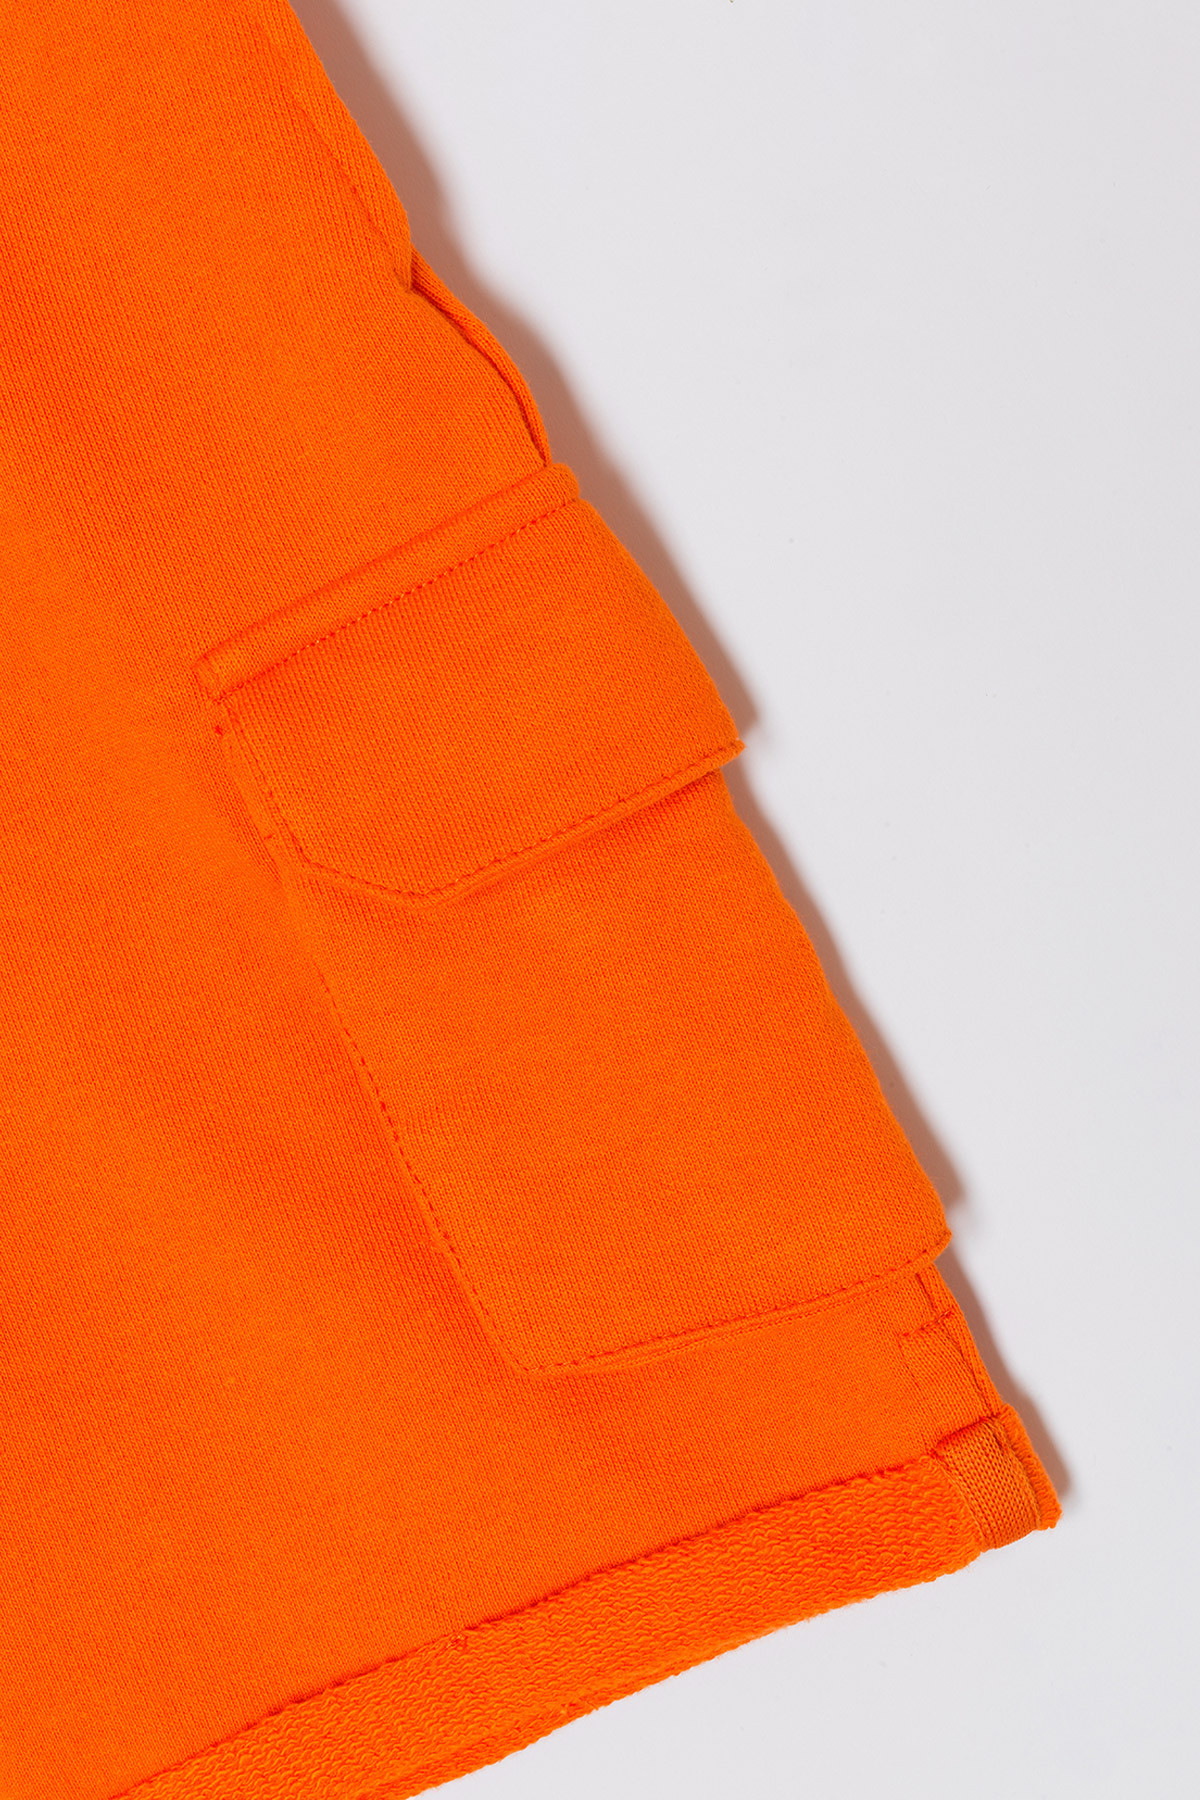 Little Ivan Orange Fleece Shorts